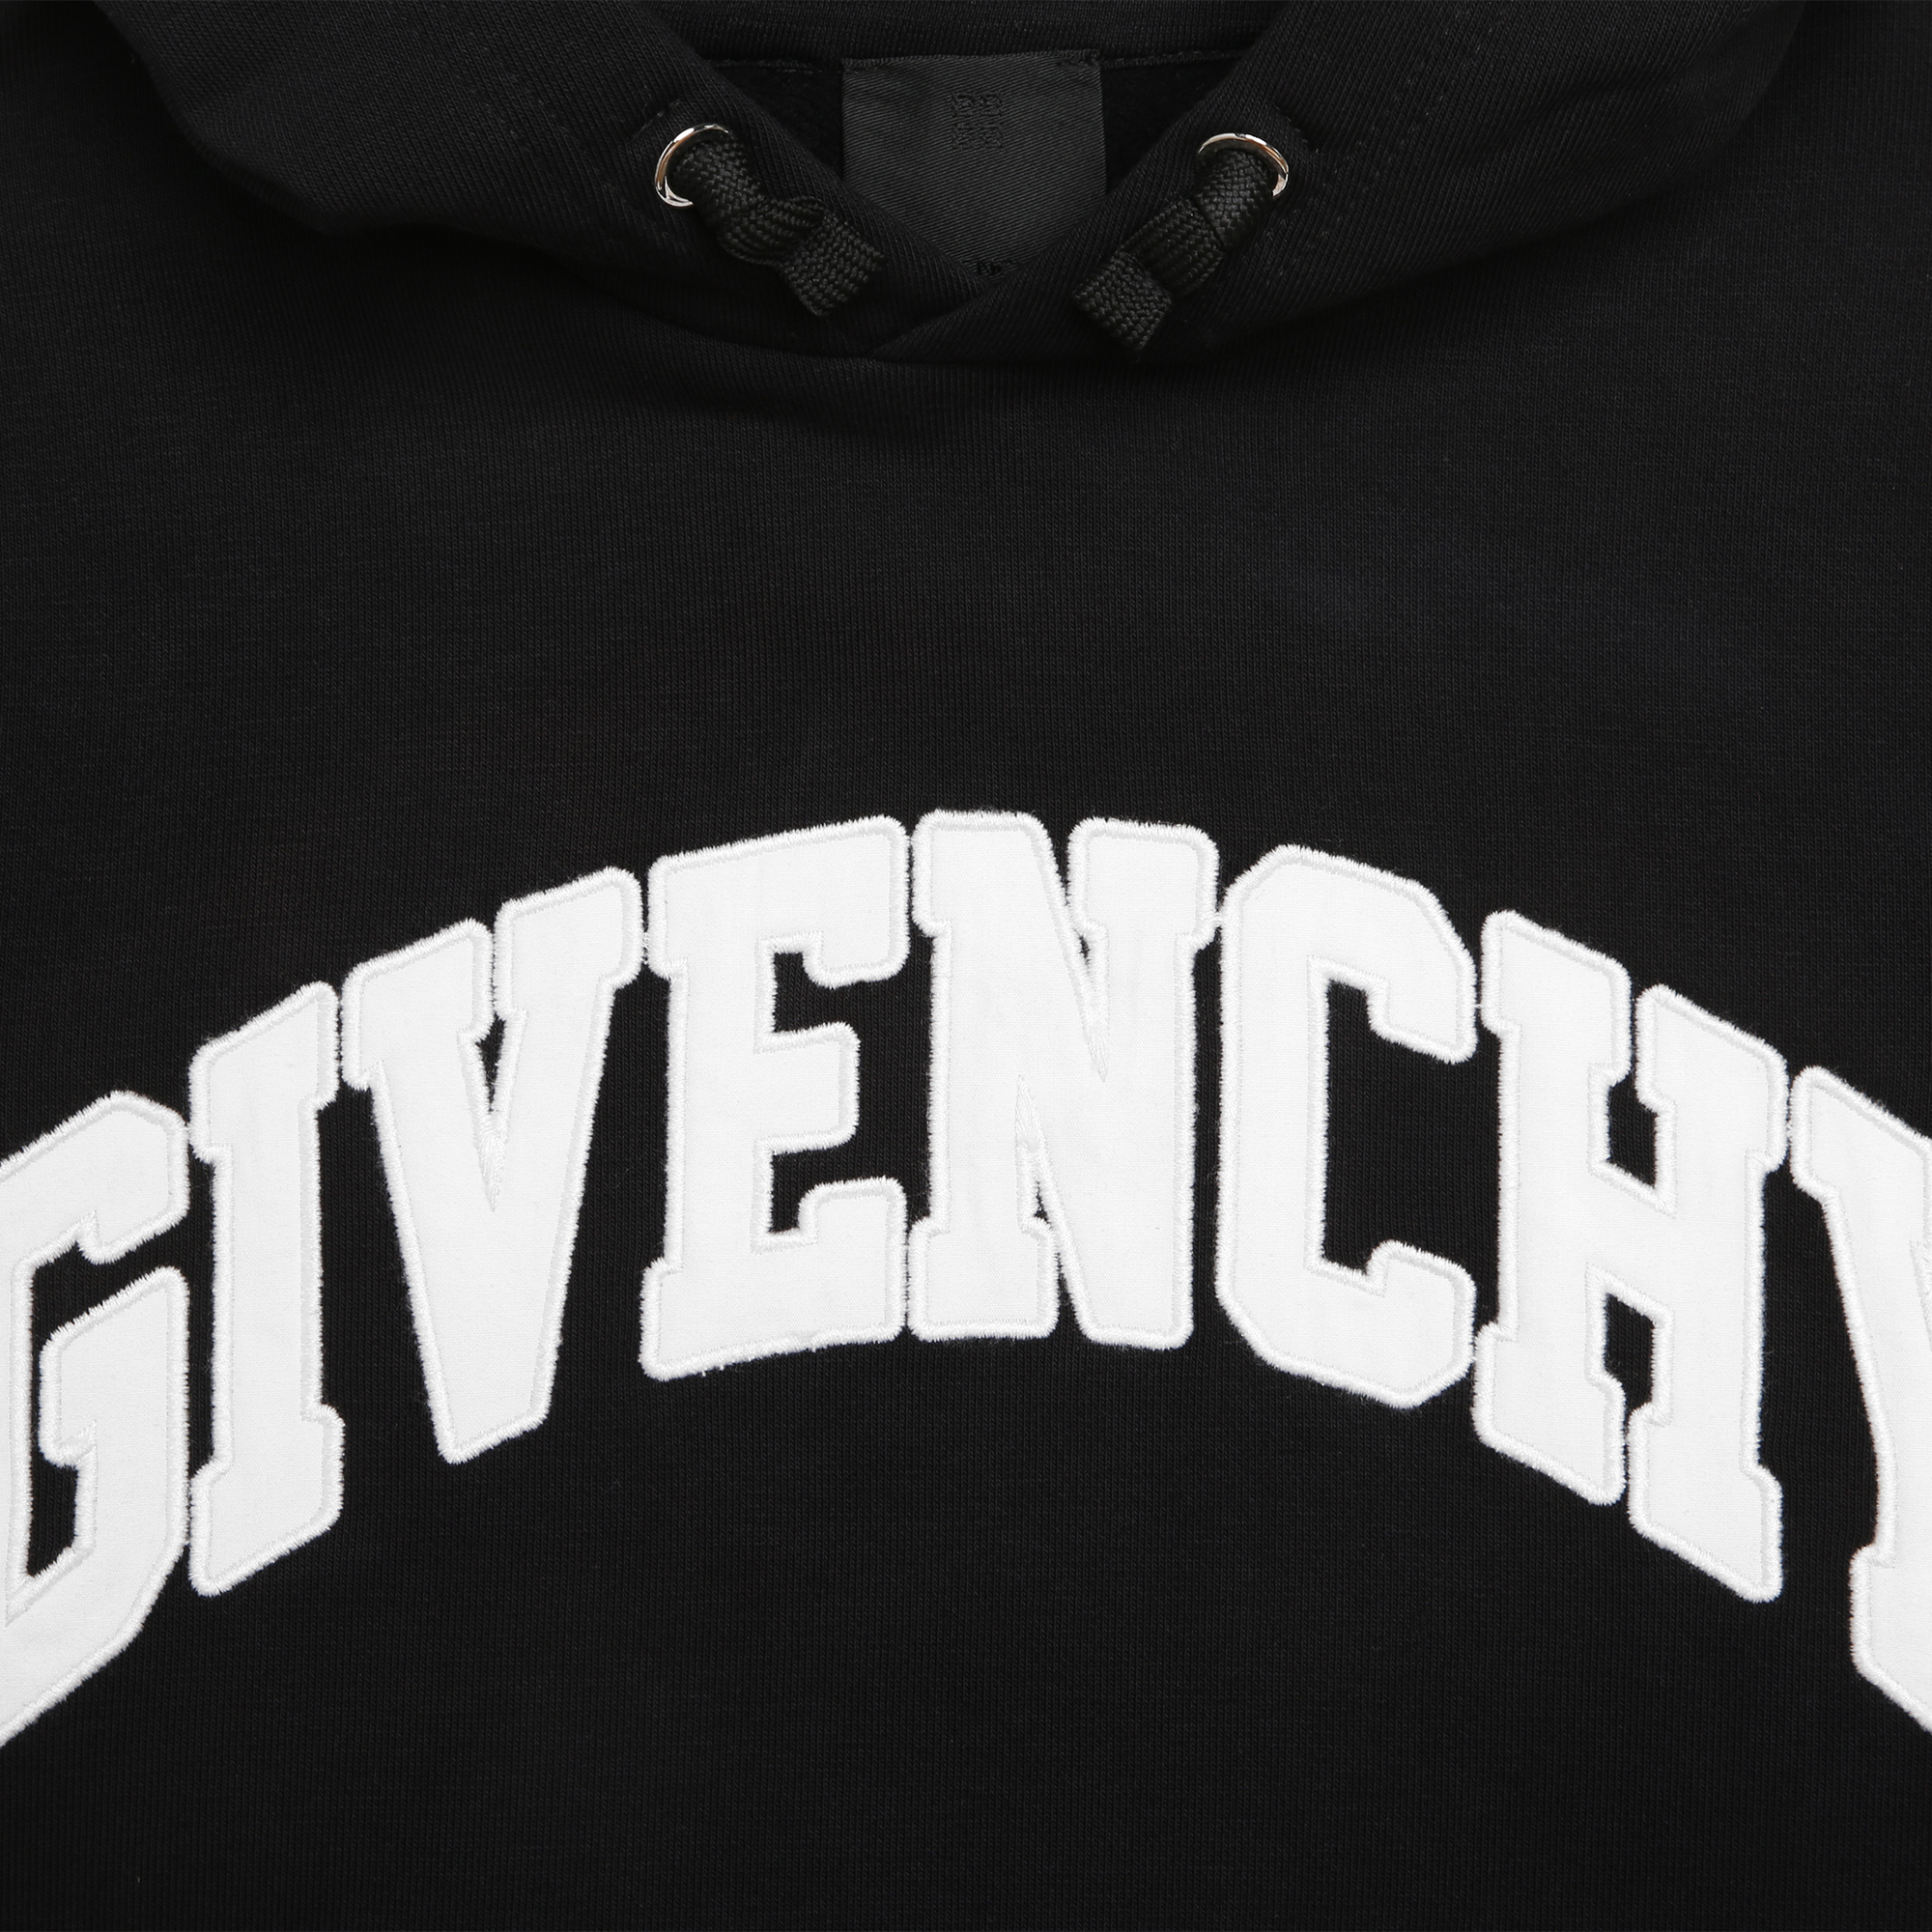 Fleece sweatshirt GIVENCHY for BOY